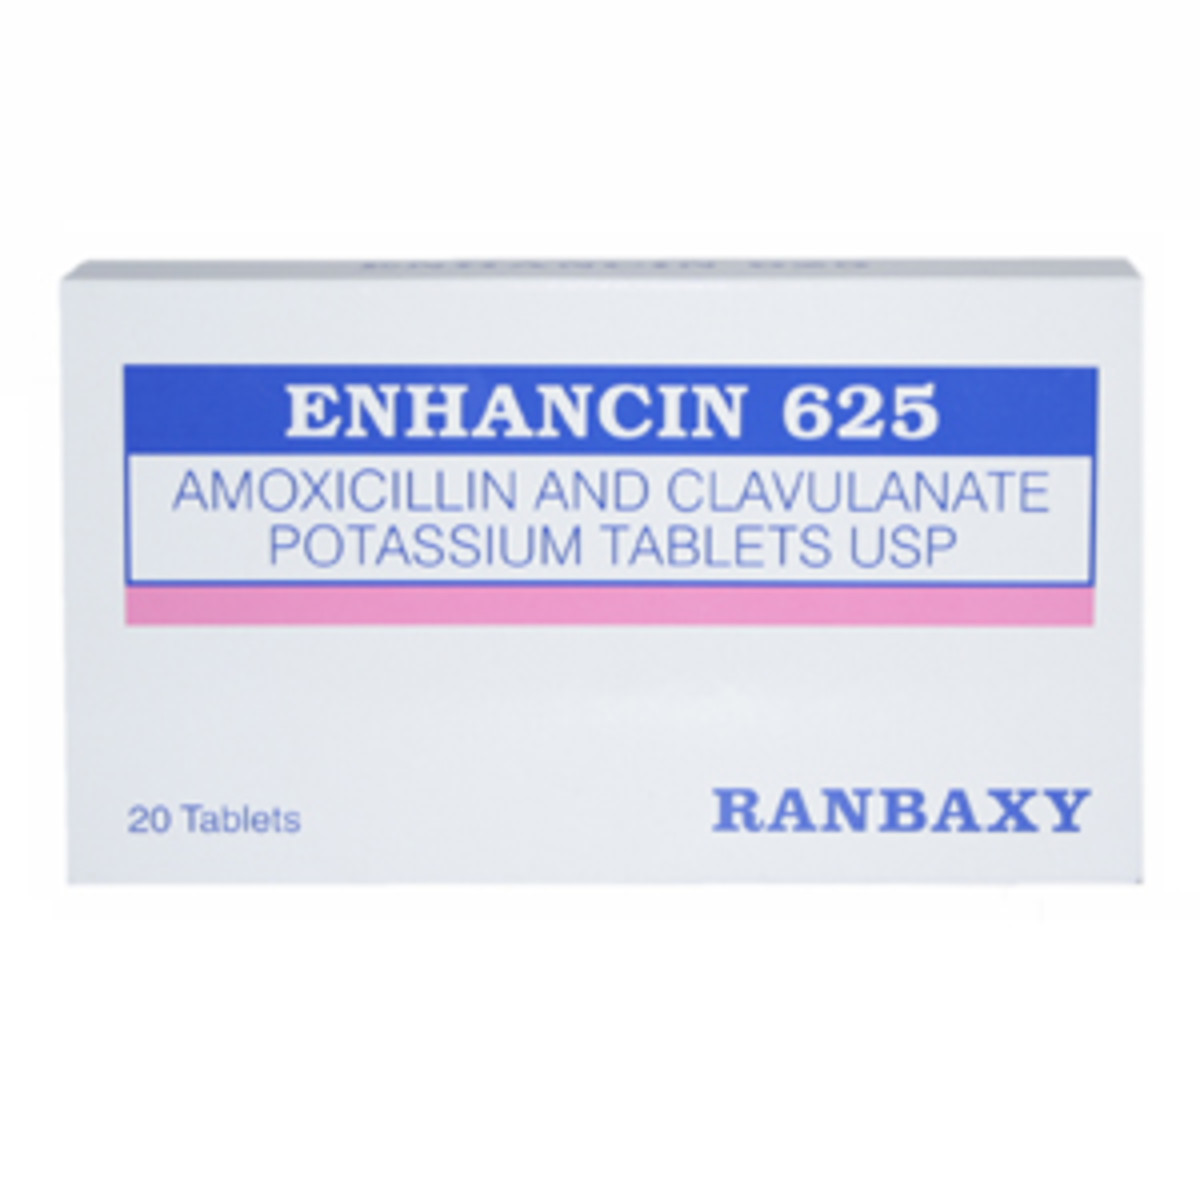 Enhancin - An antibiotic